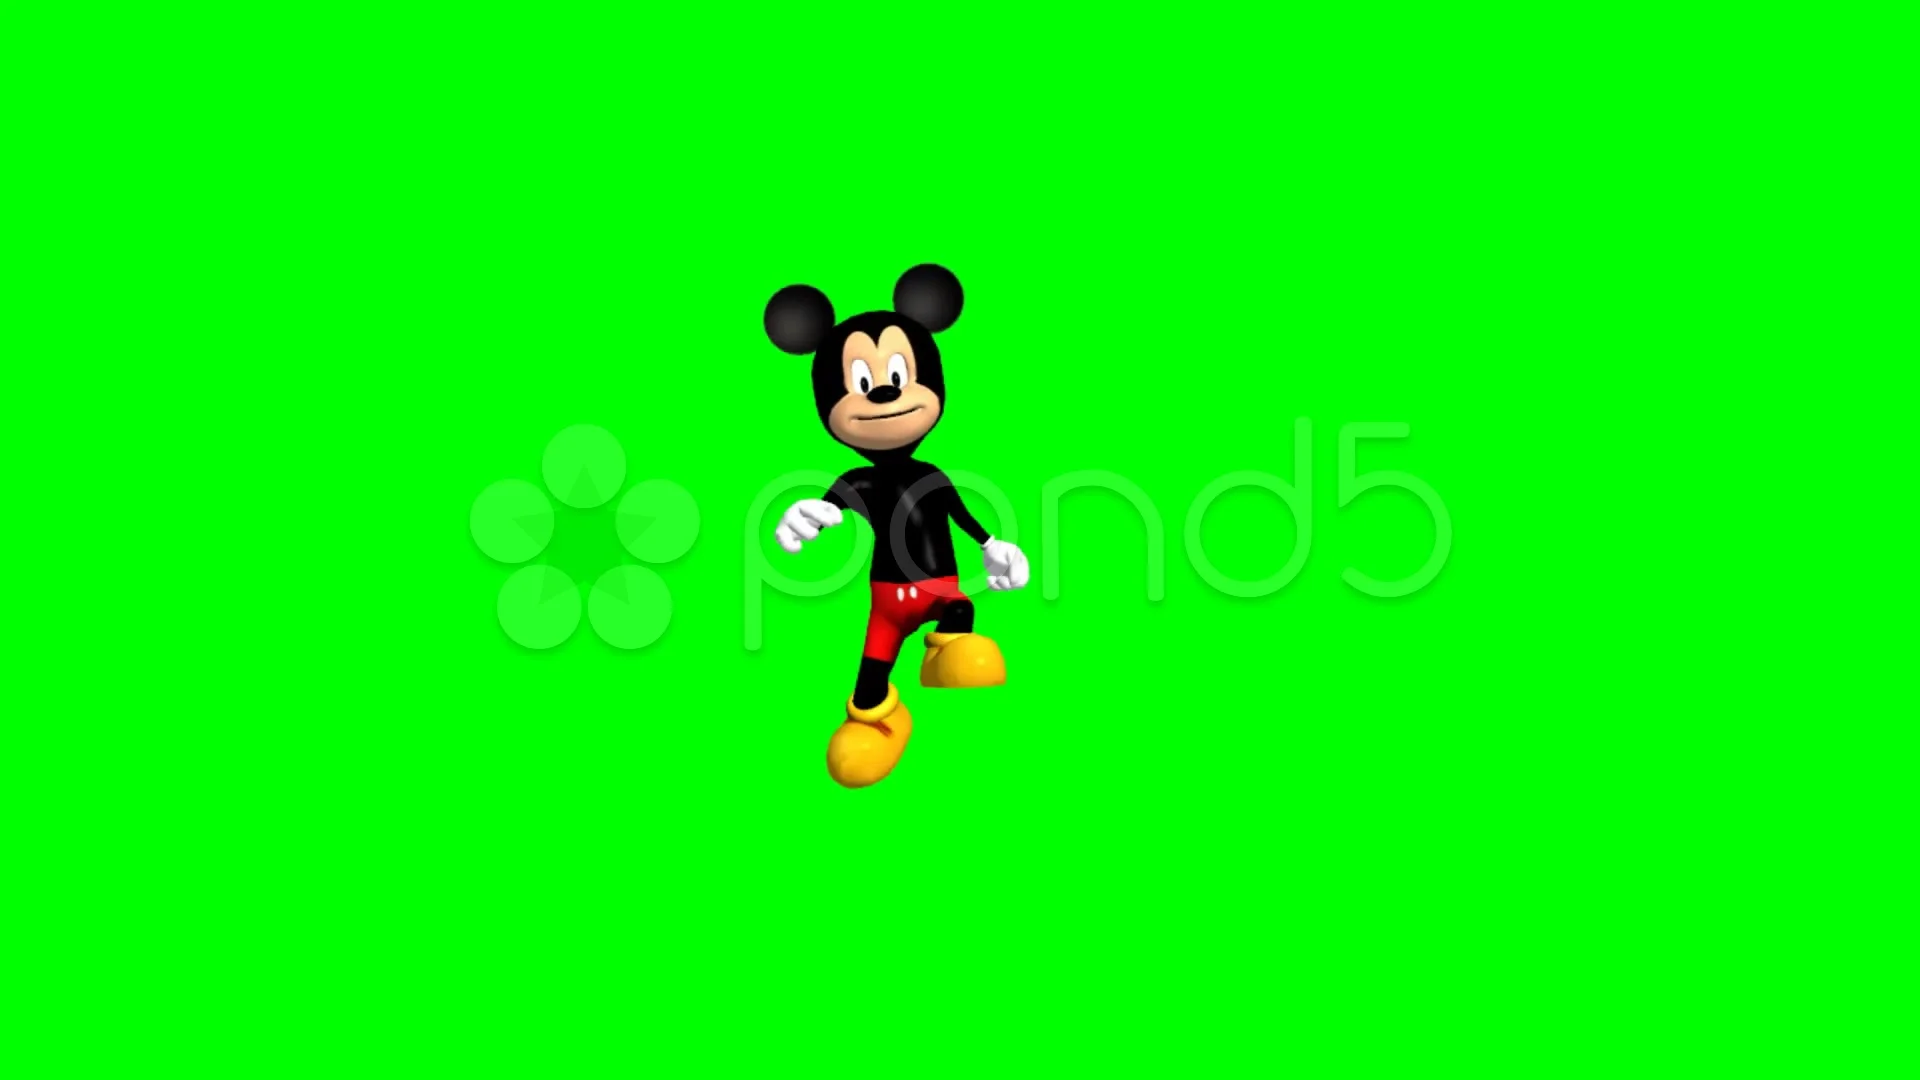 Mickey Mouse runs - green screen | Stock Video | Pond5